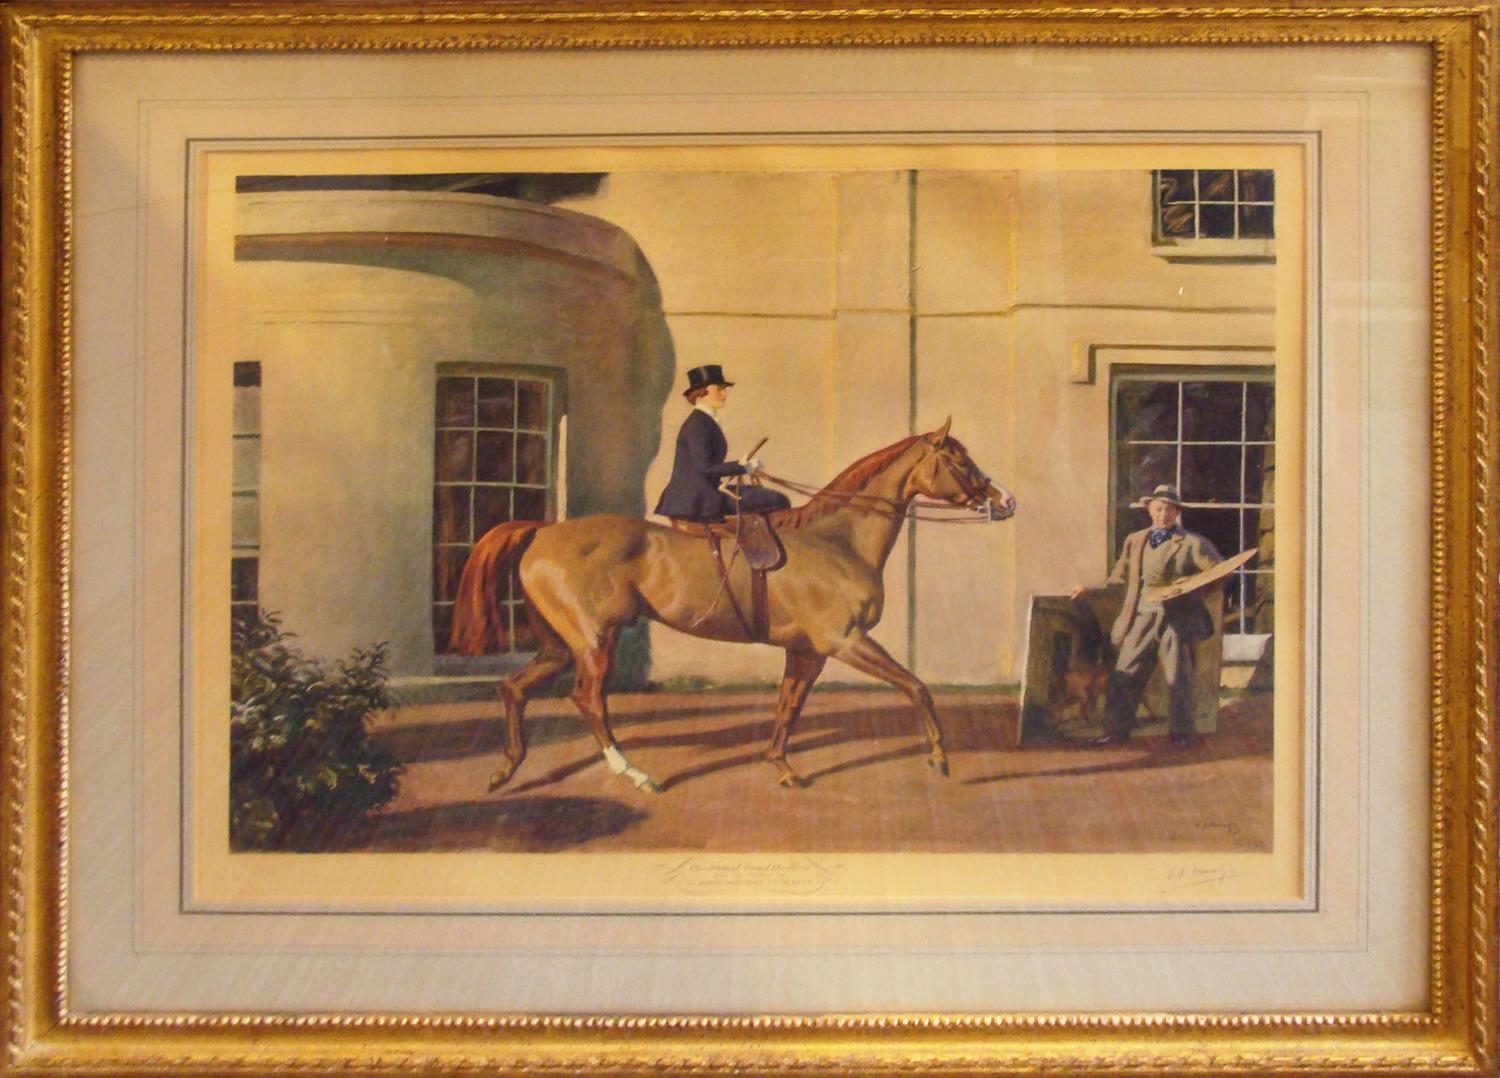 SIR ALFRED MUNNINGS KCVO PRA RI (English, 1878-1959) 'Our Mutual Friend the Horse', lithograph in